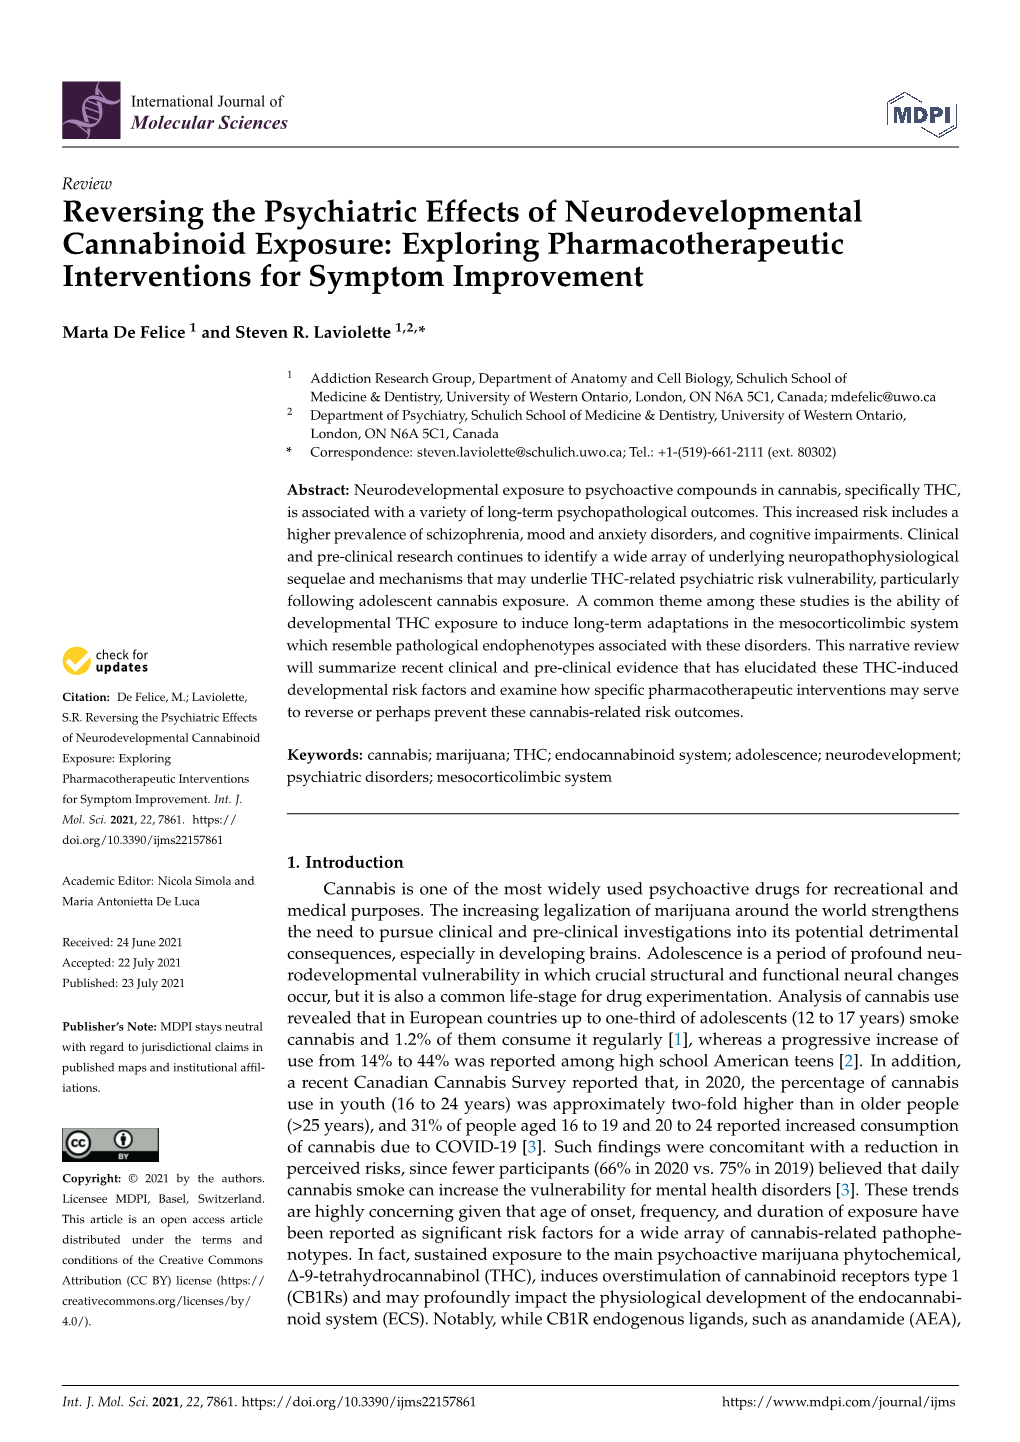 Reversing the Psychiatric Effects of Neurodevelopmental Cannabinoid Exposure: Exploring Pharmacotherapeutic Interventions for Symptom Improvement